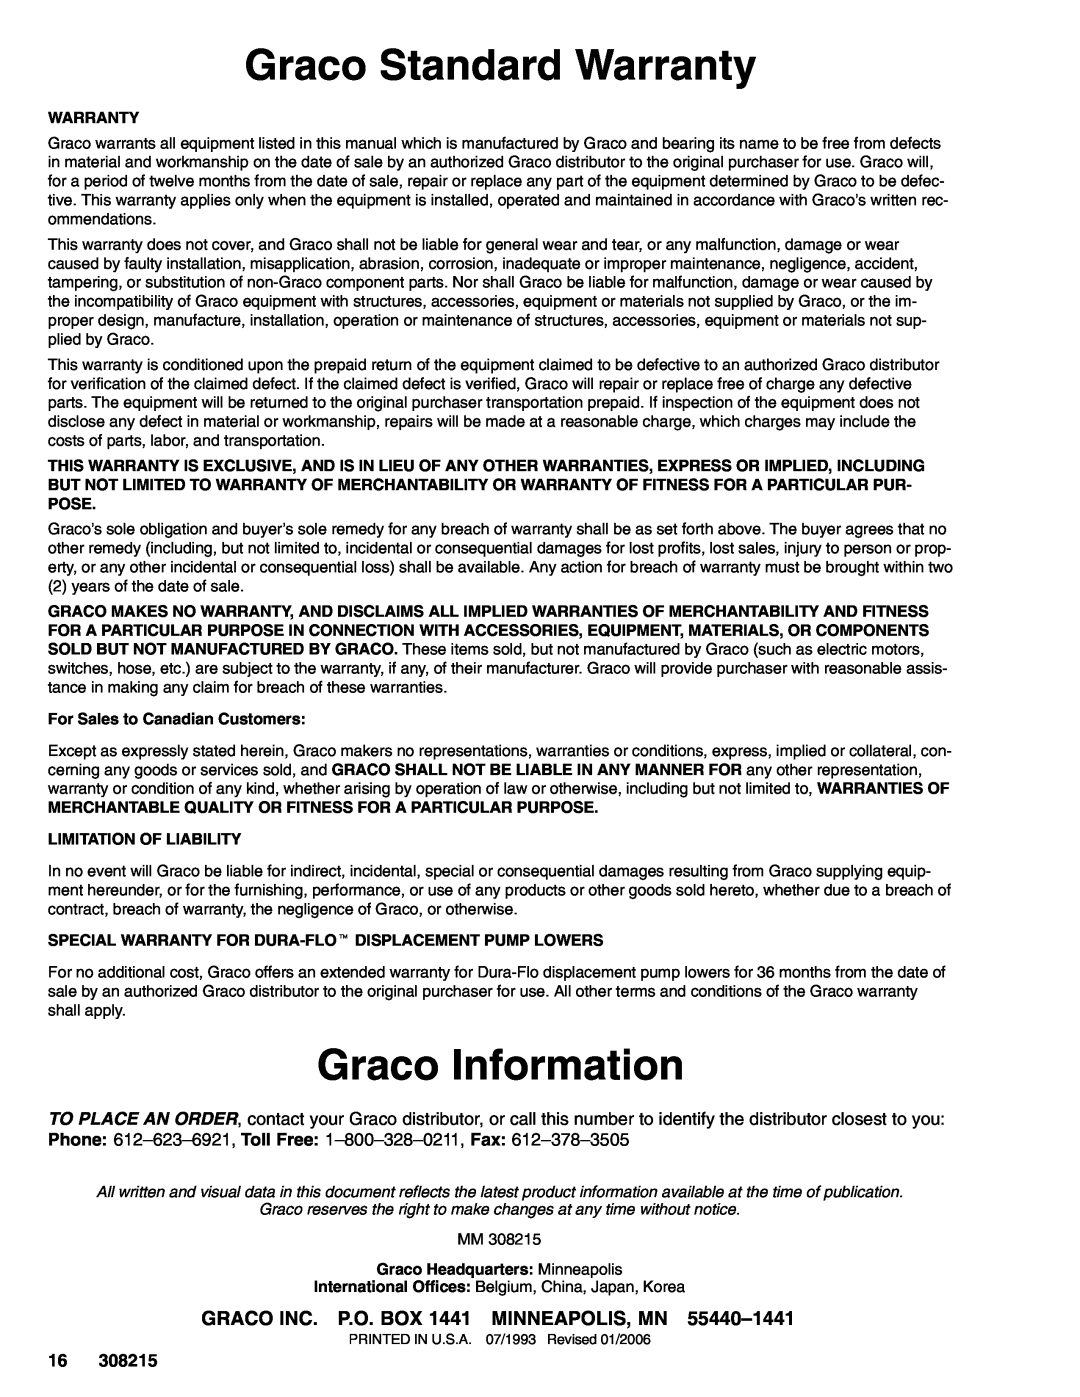 Graco Inc 238144, 308215L, 222973 Graco Standard Warranty, Graco Information, GRACO INC. P.O. BOX 1441 MINNEAPOLIS, MN 